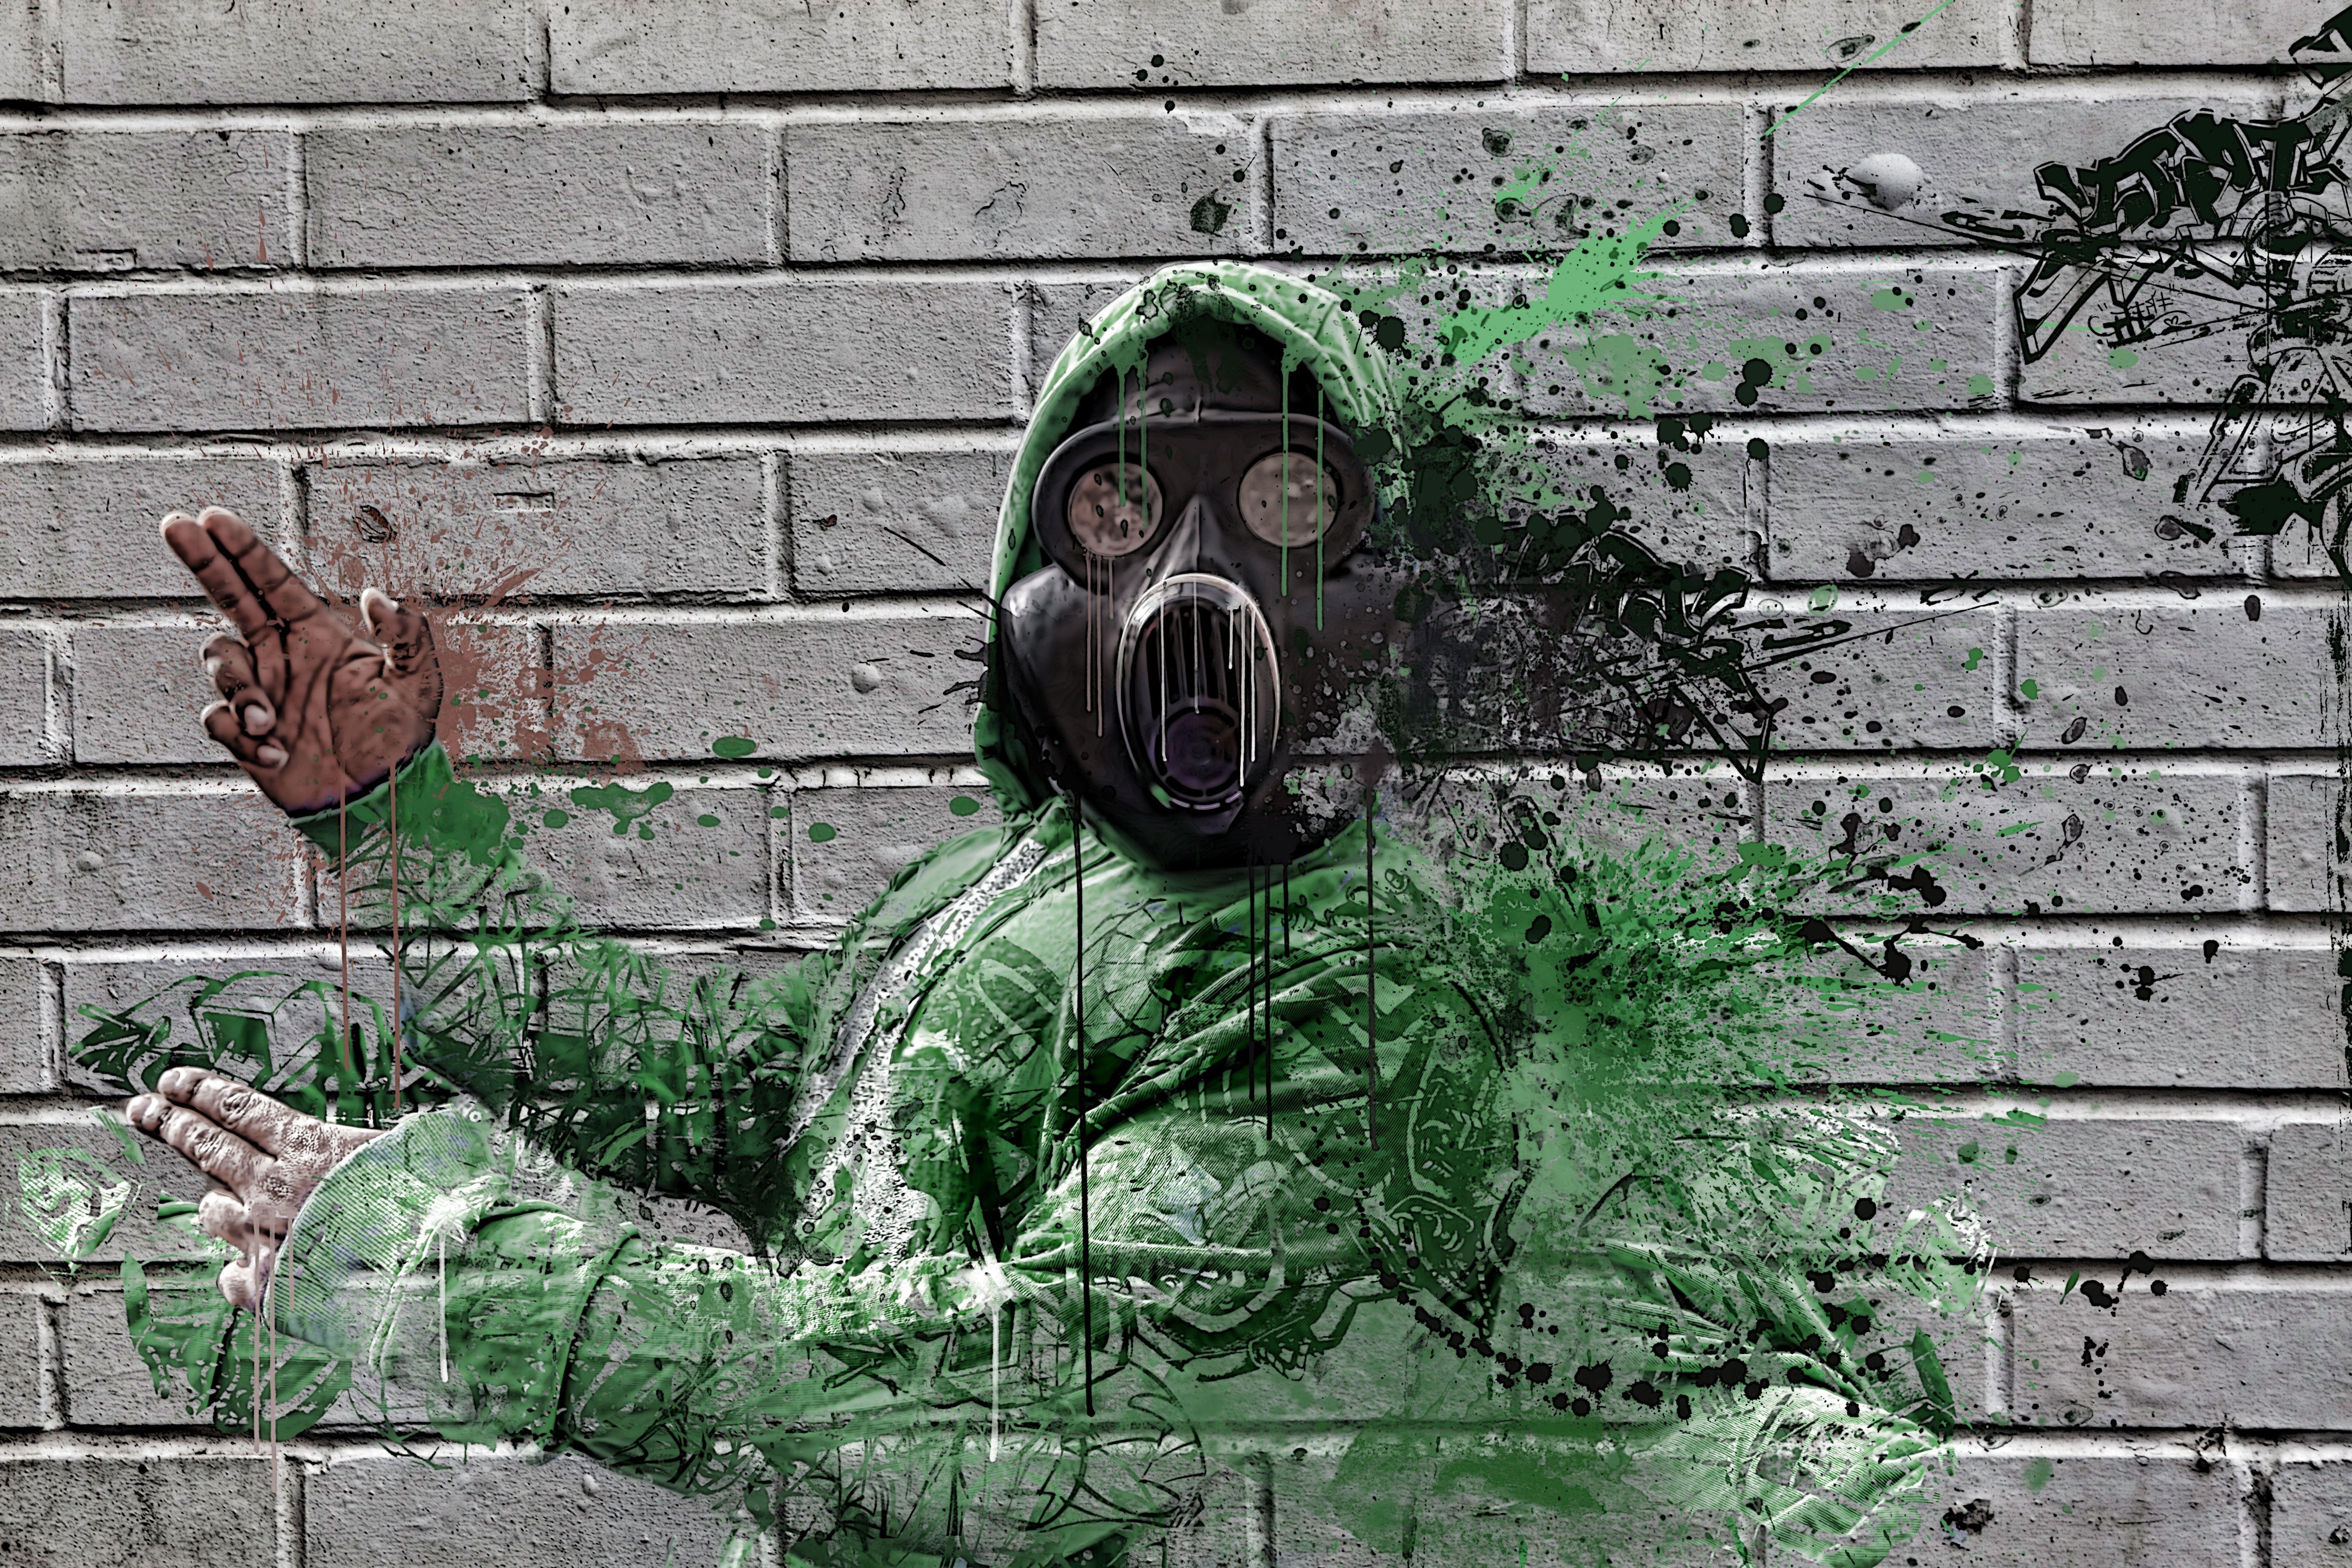 Paint Splatter Graffiti 5k Retina Ultra HD Wallpaper and Background